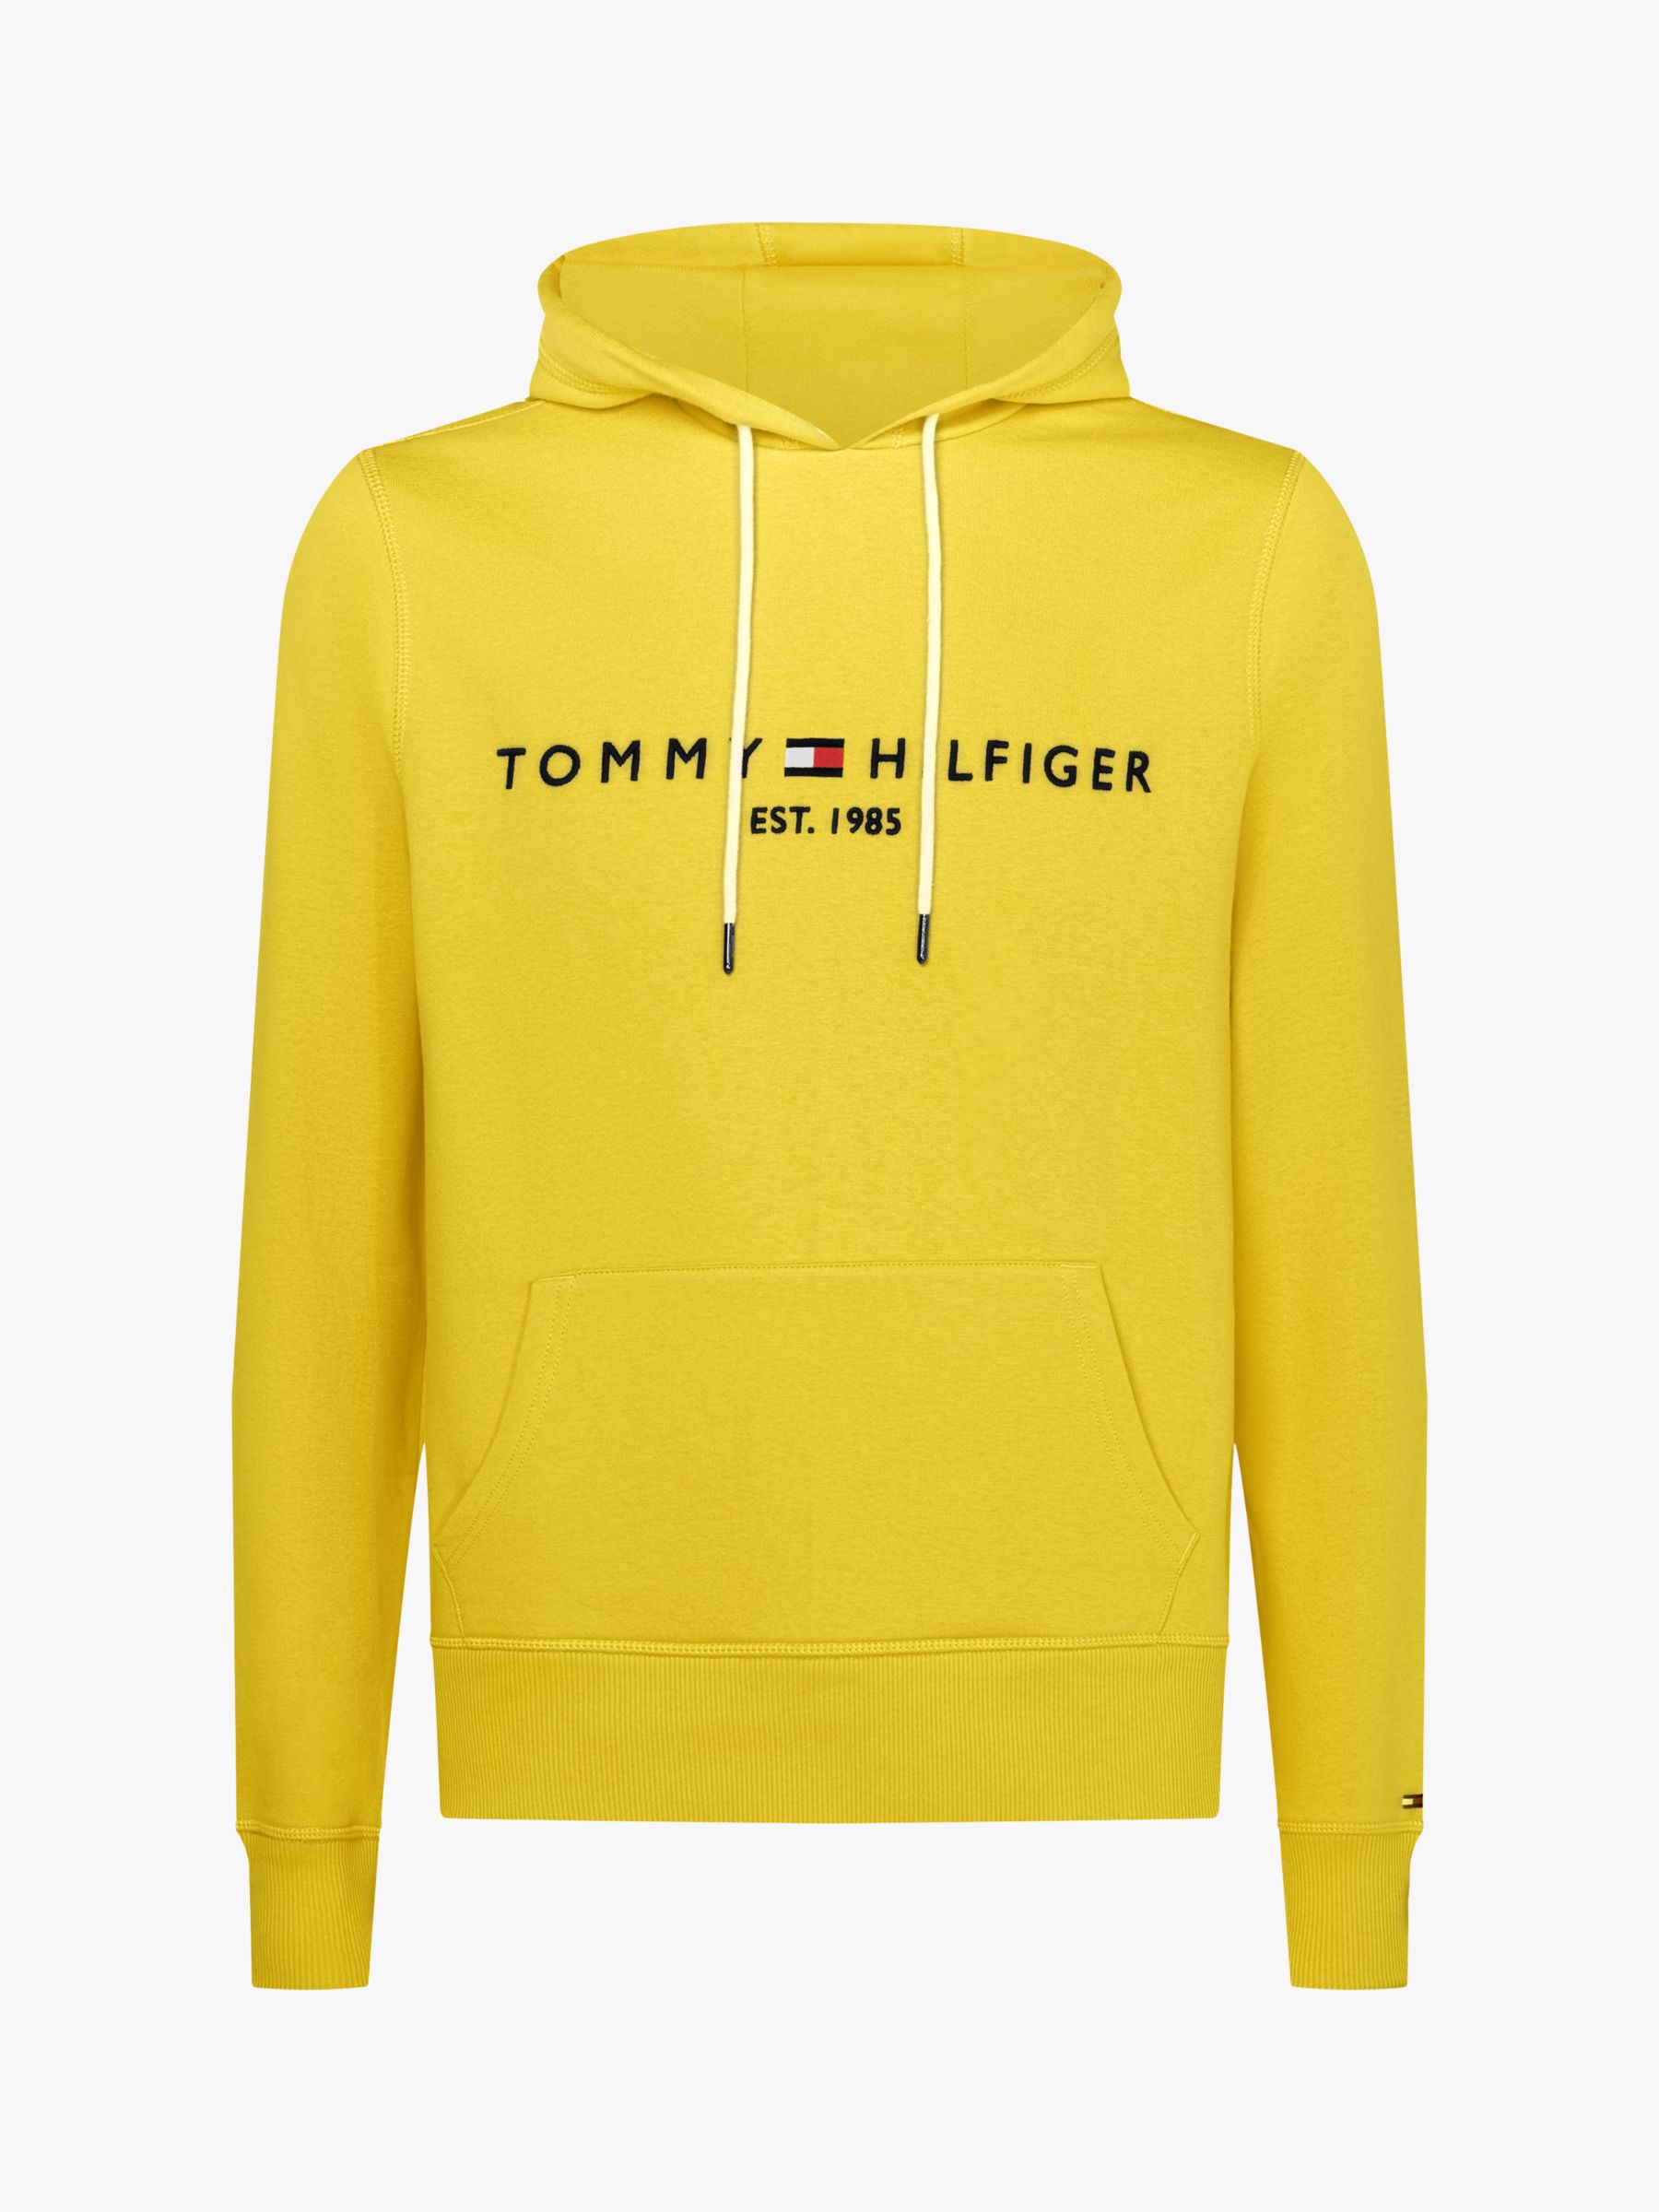 Tommy Hilfiger Yellow Hoodie Best Sale, 53% OFF | www 